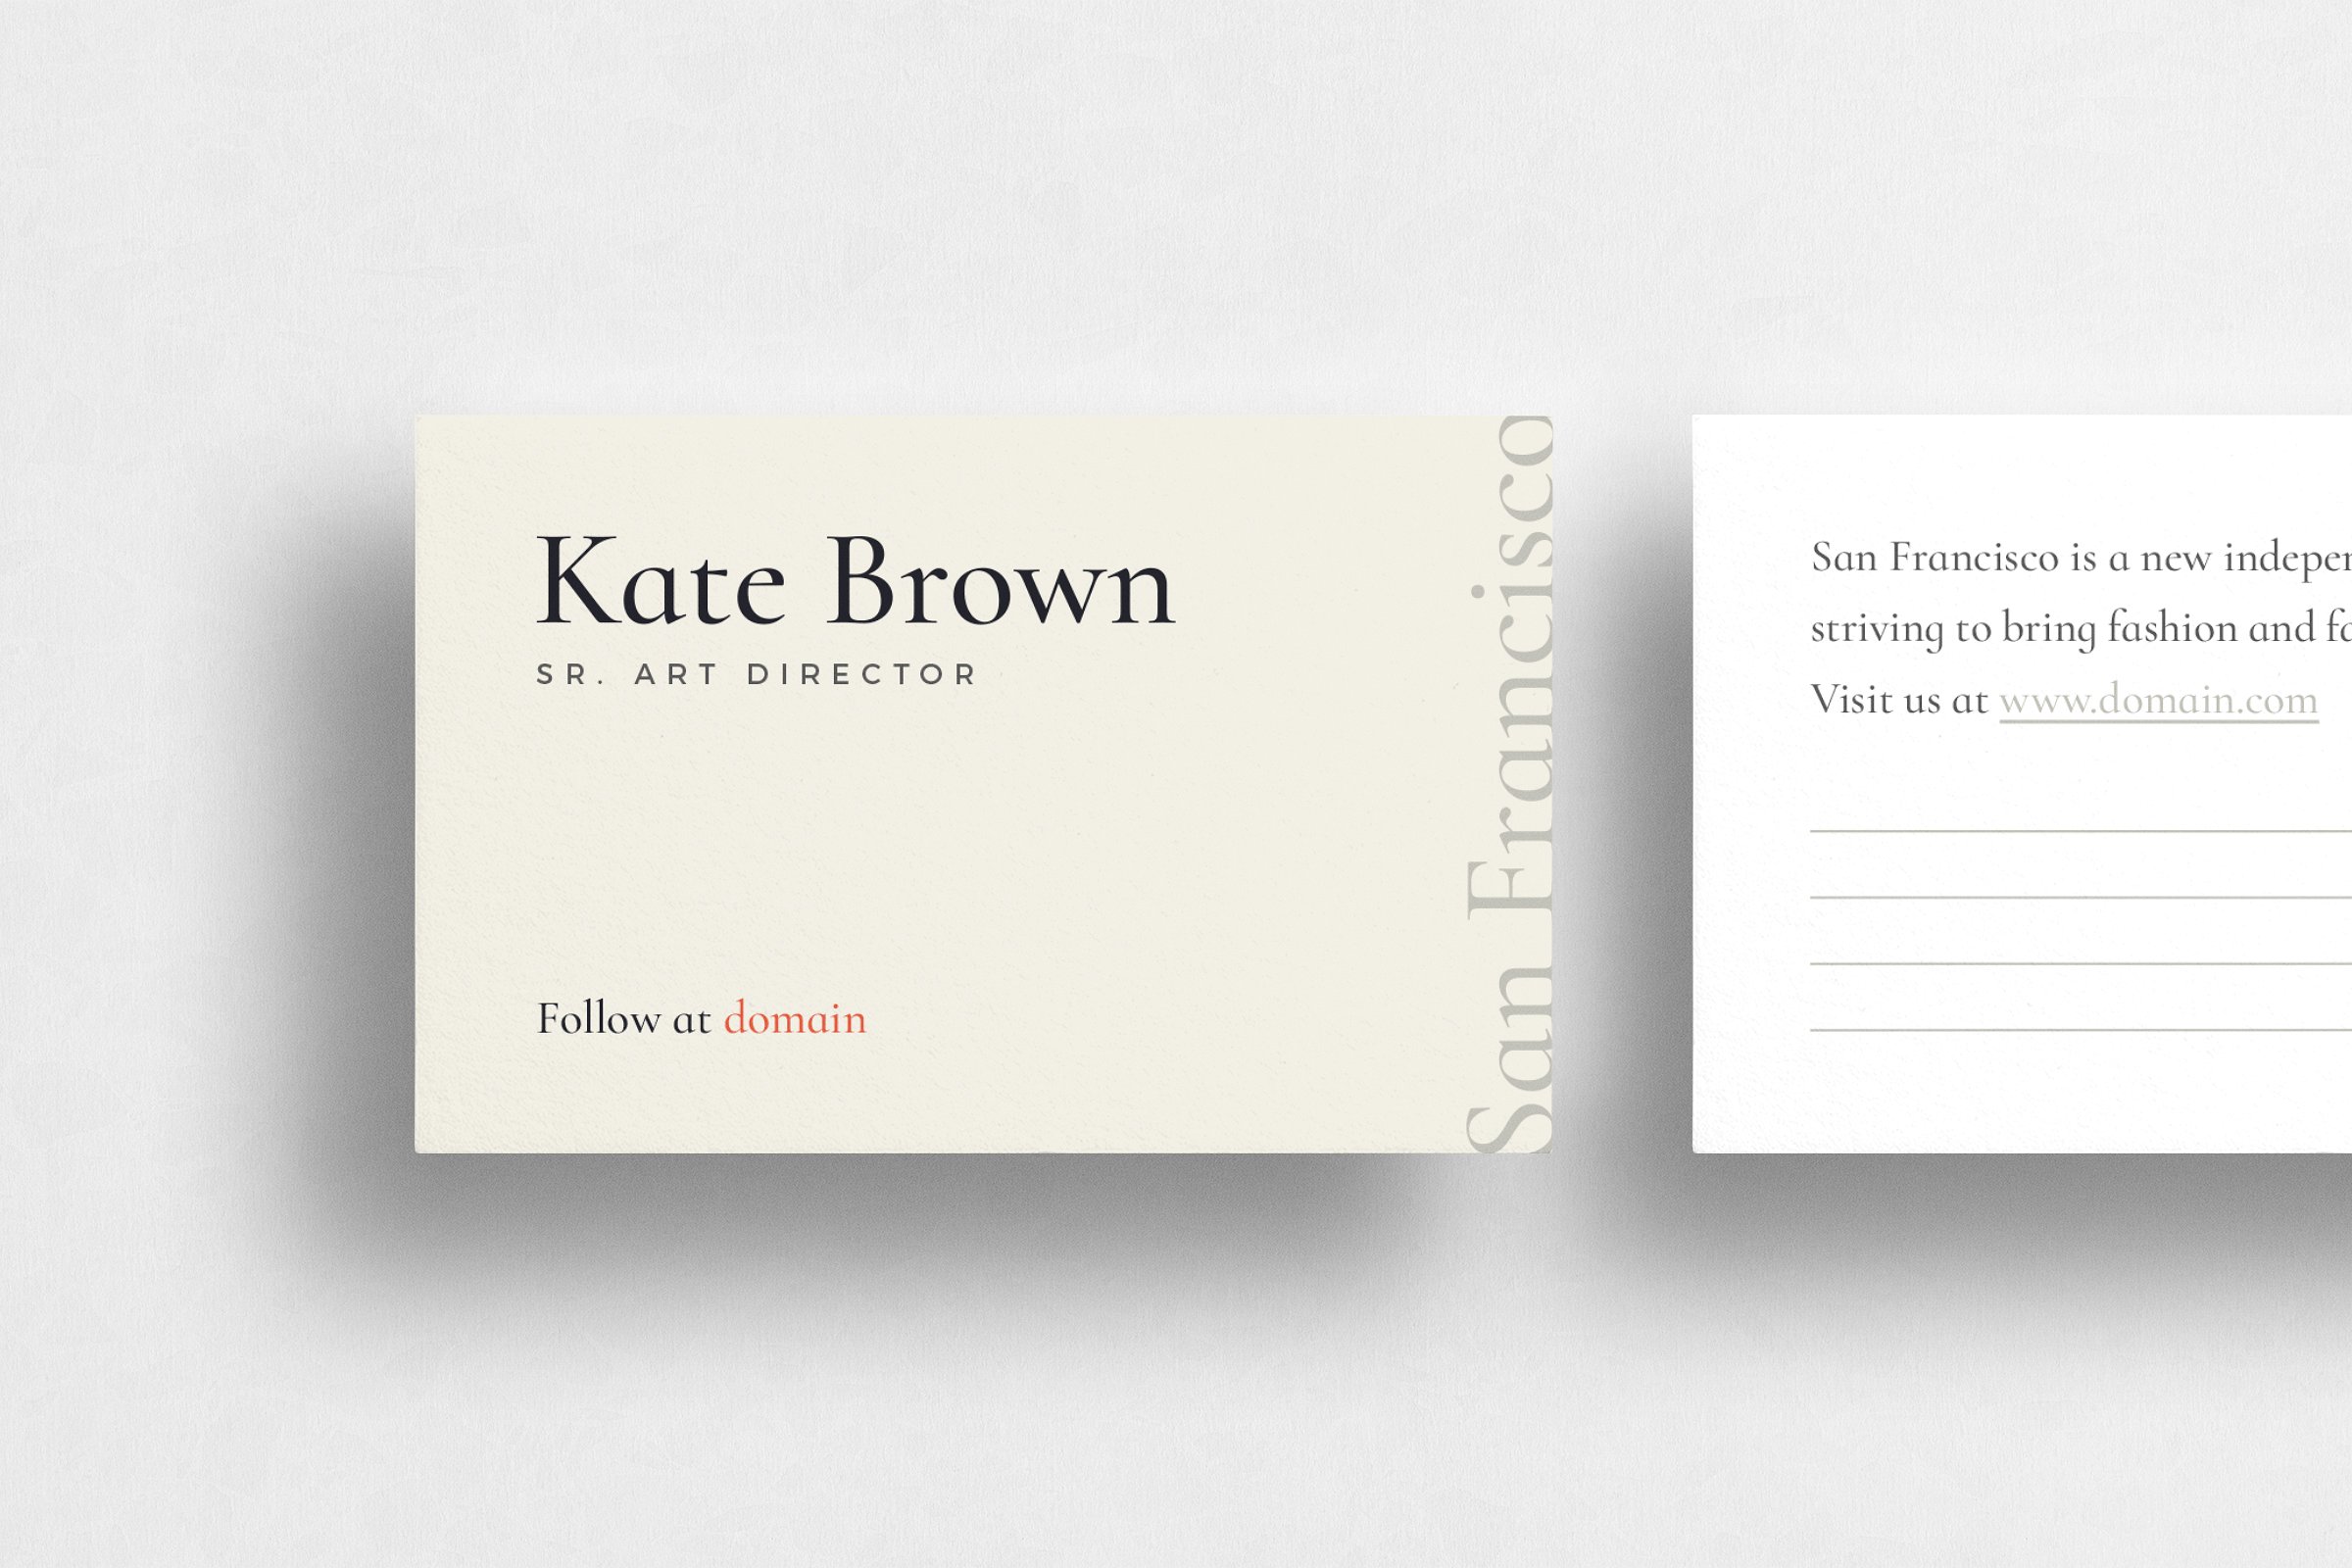 极简主义企业名片设计模板1 San Francisco Business Cards插图1